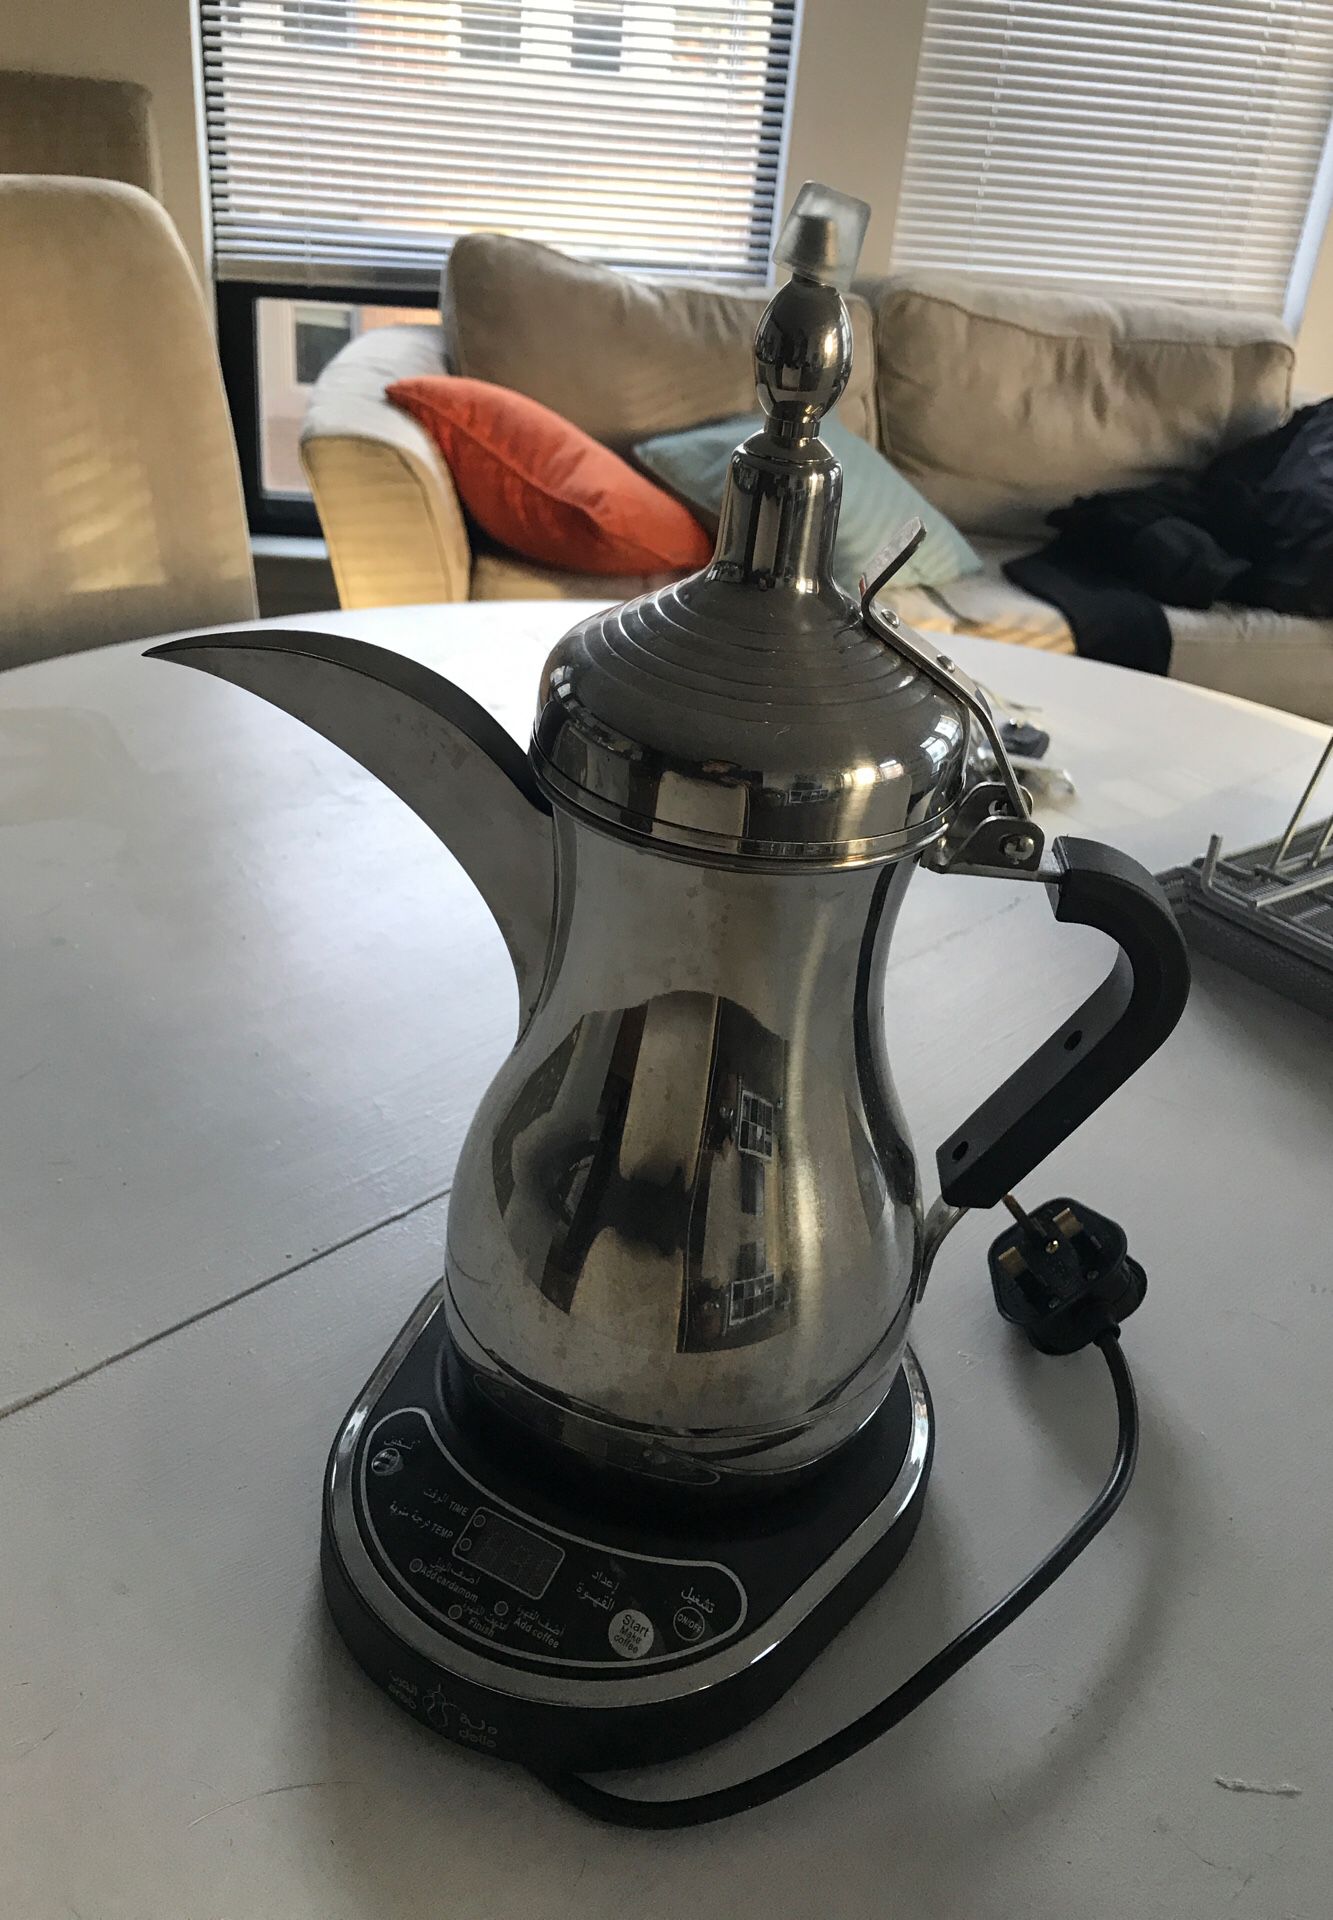 Arabic coffee makes